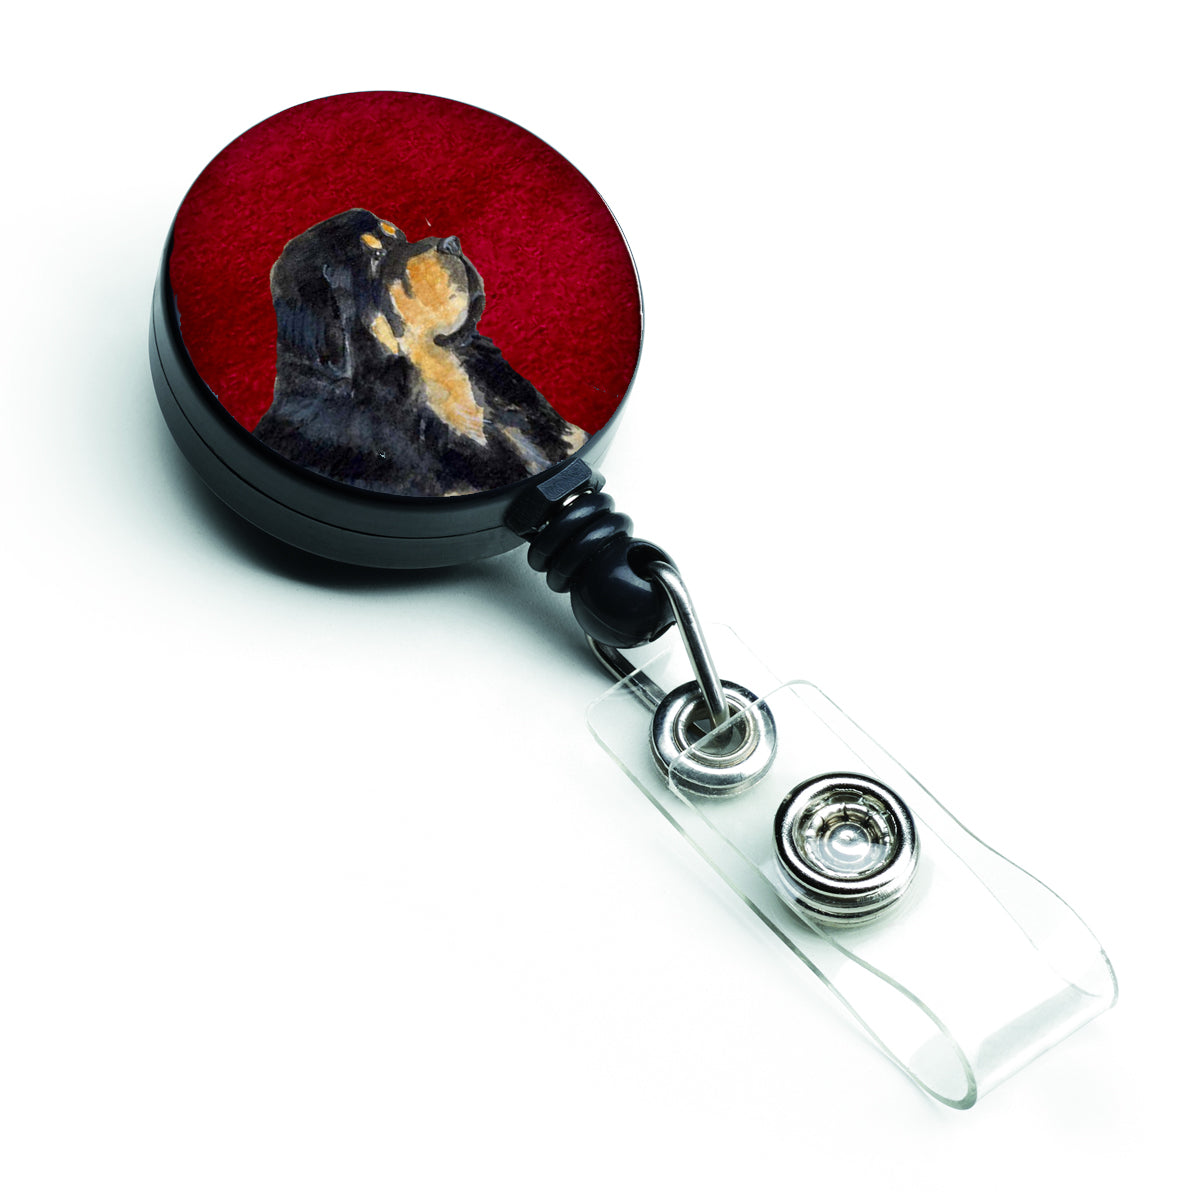 Tibetan Mastiff Retractable Badge Reel or ID Holder with Clip